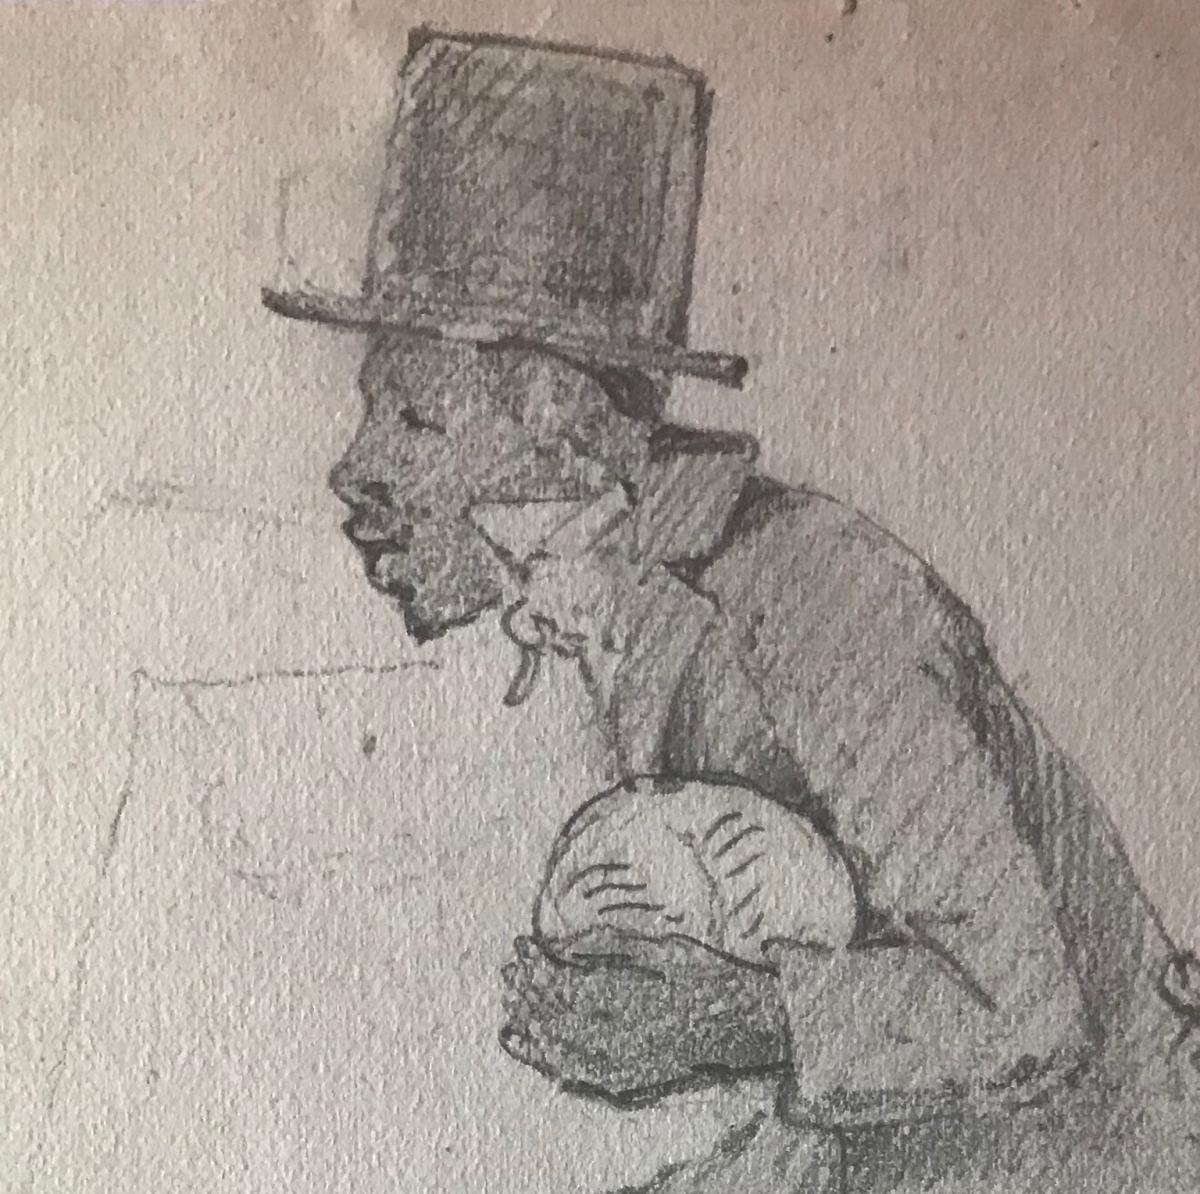 A black man in Washington, George Willoughby Maynard, detail